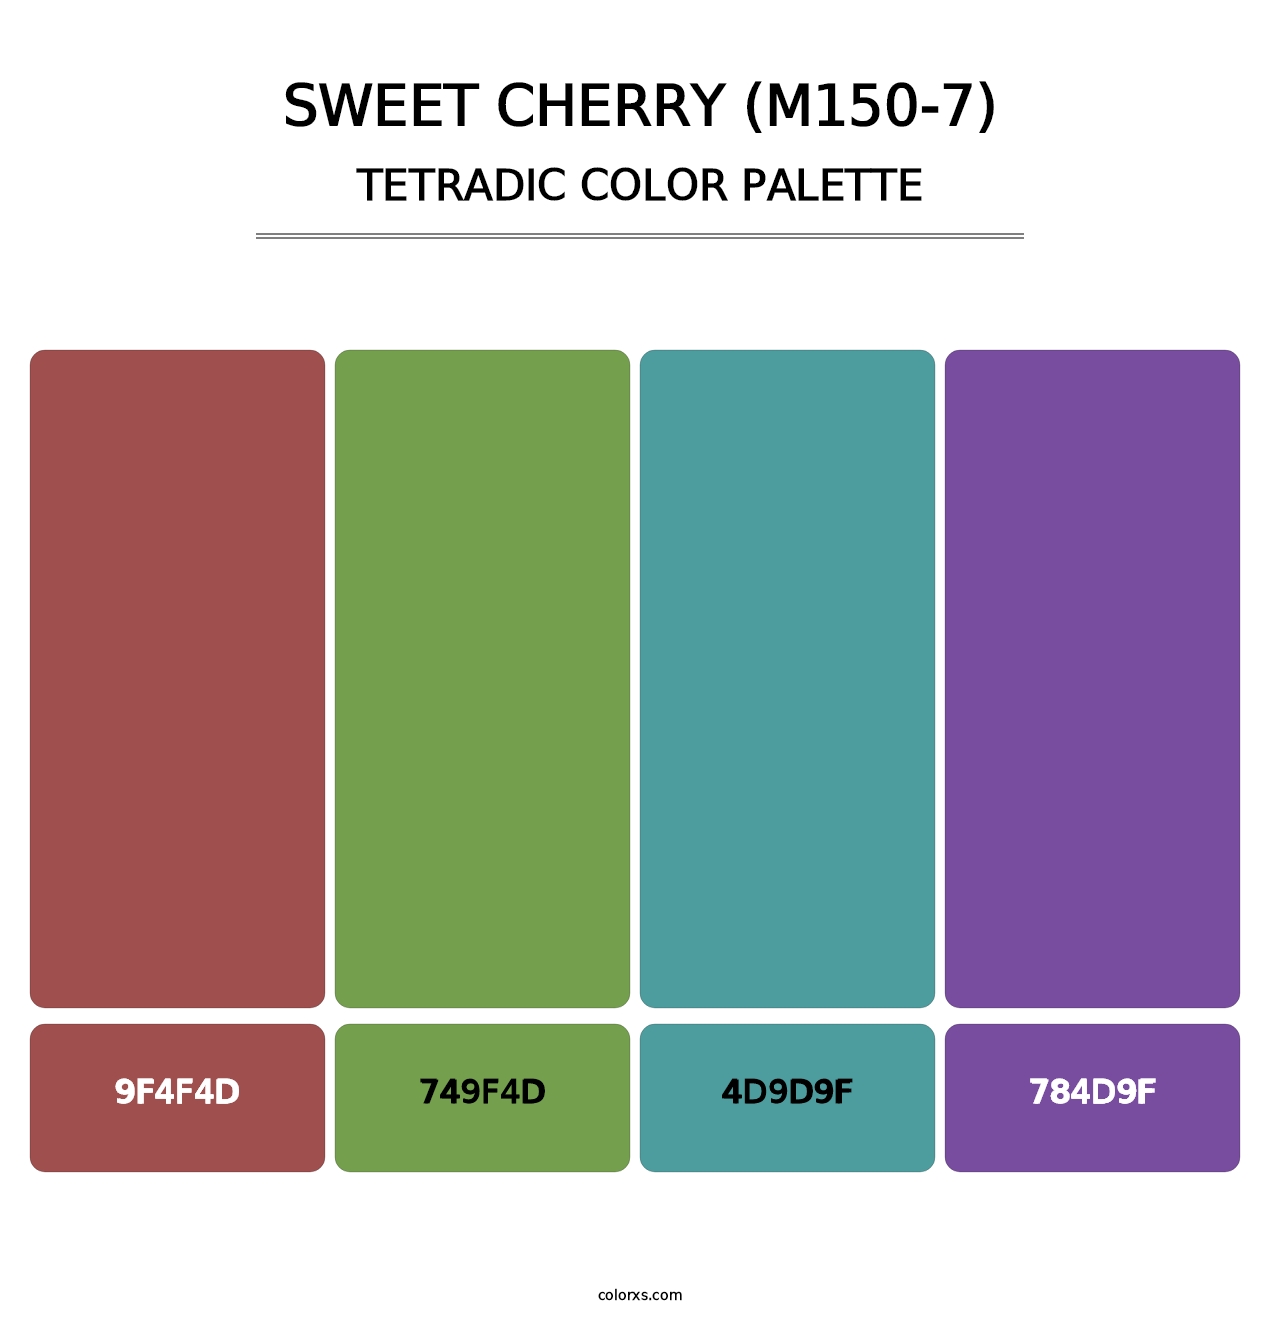 Sweet Cherry (M150-7) - Tetradic Color Palette